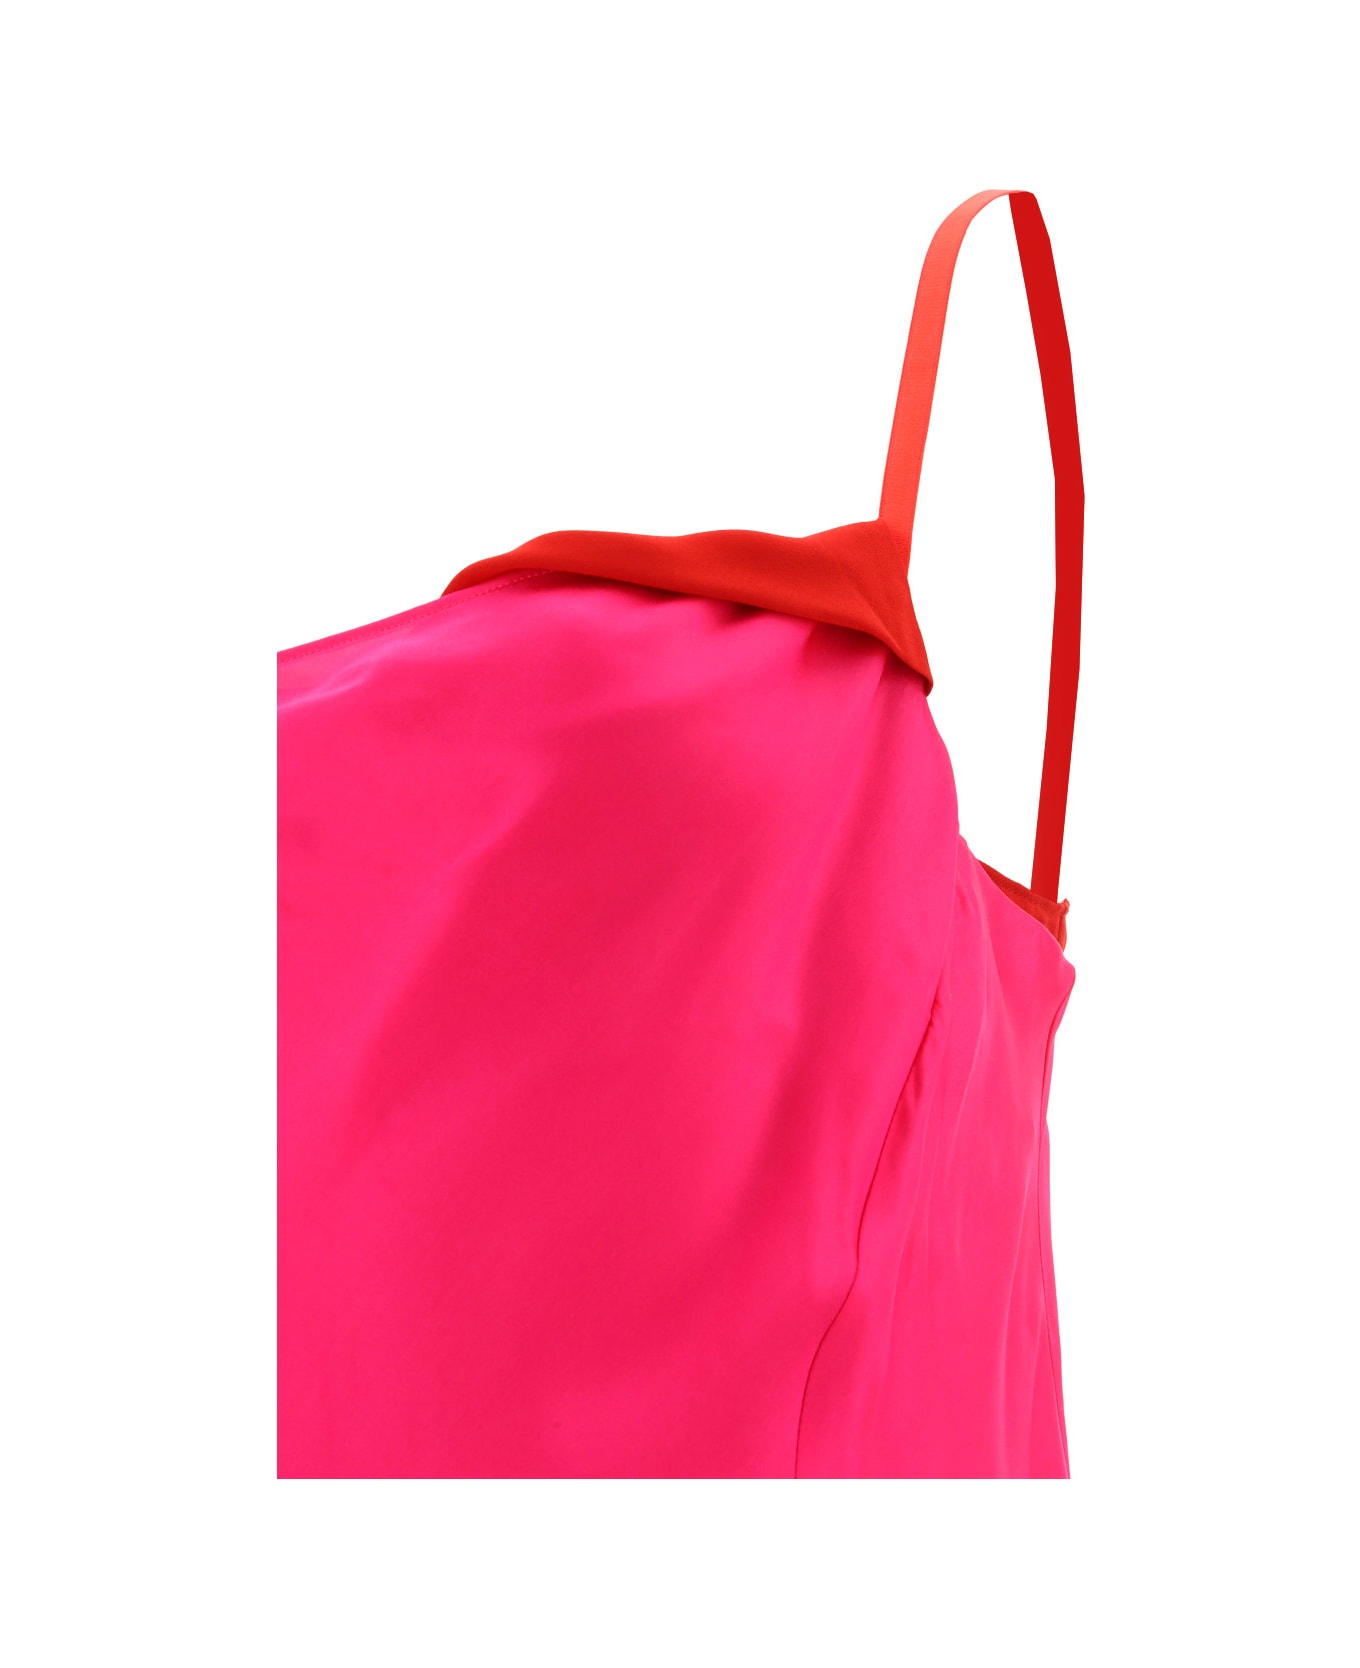 Acne Studios Wrap Dress - Fuchsia Pink ワンピース＆ドレス